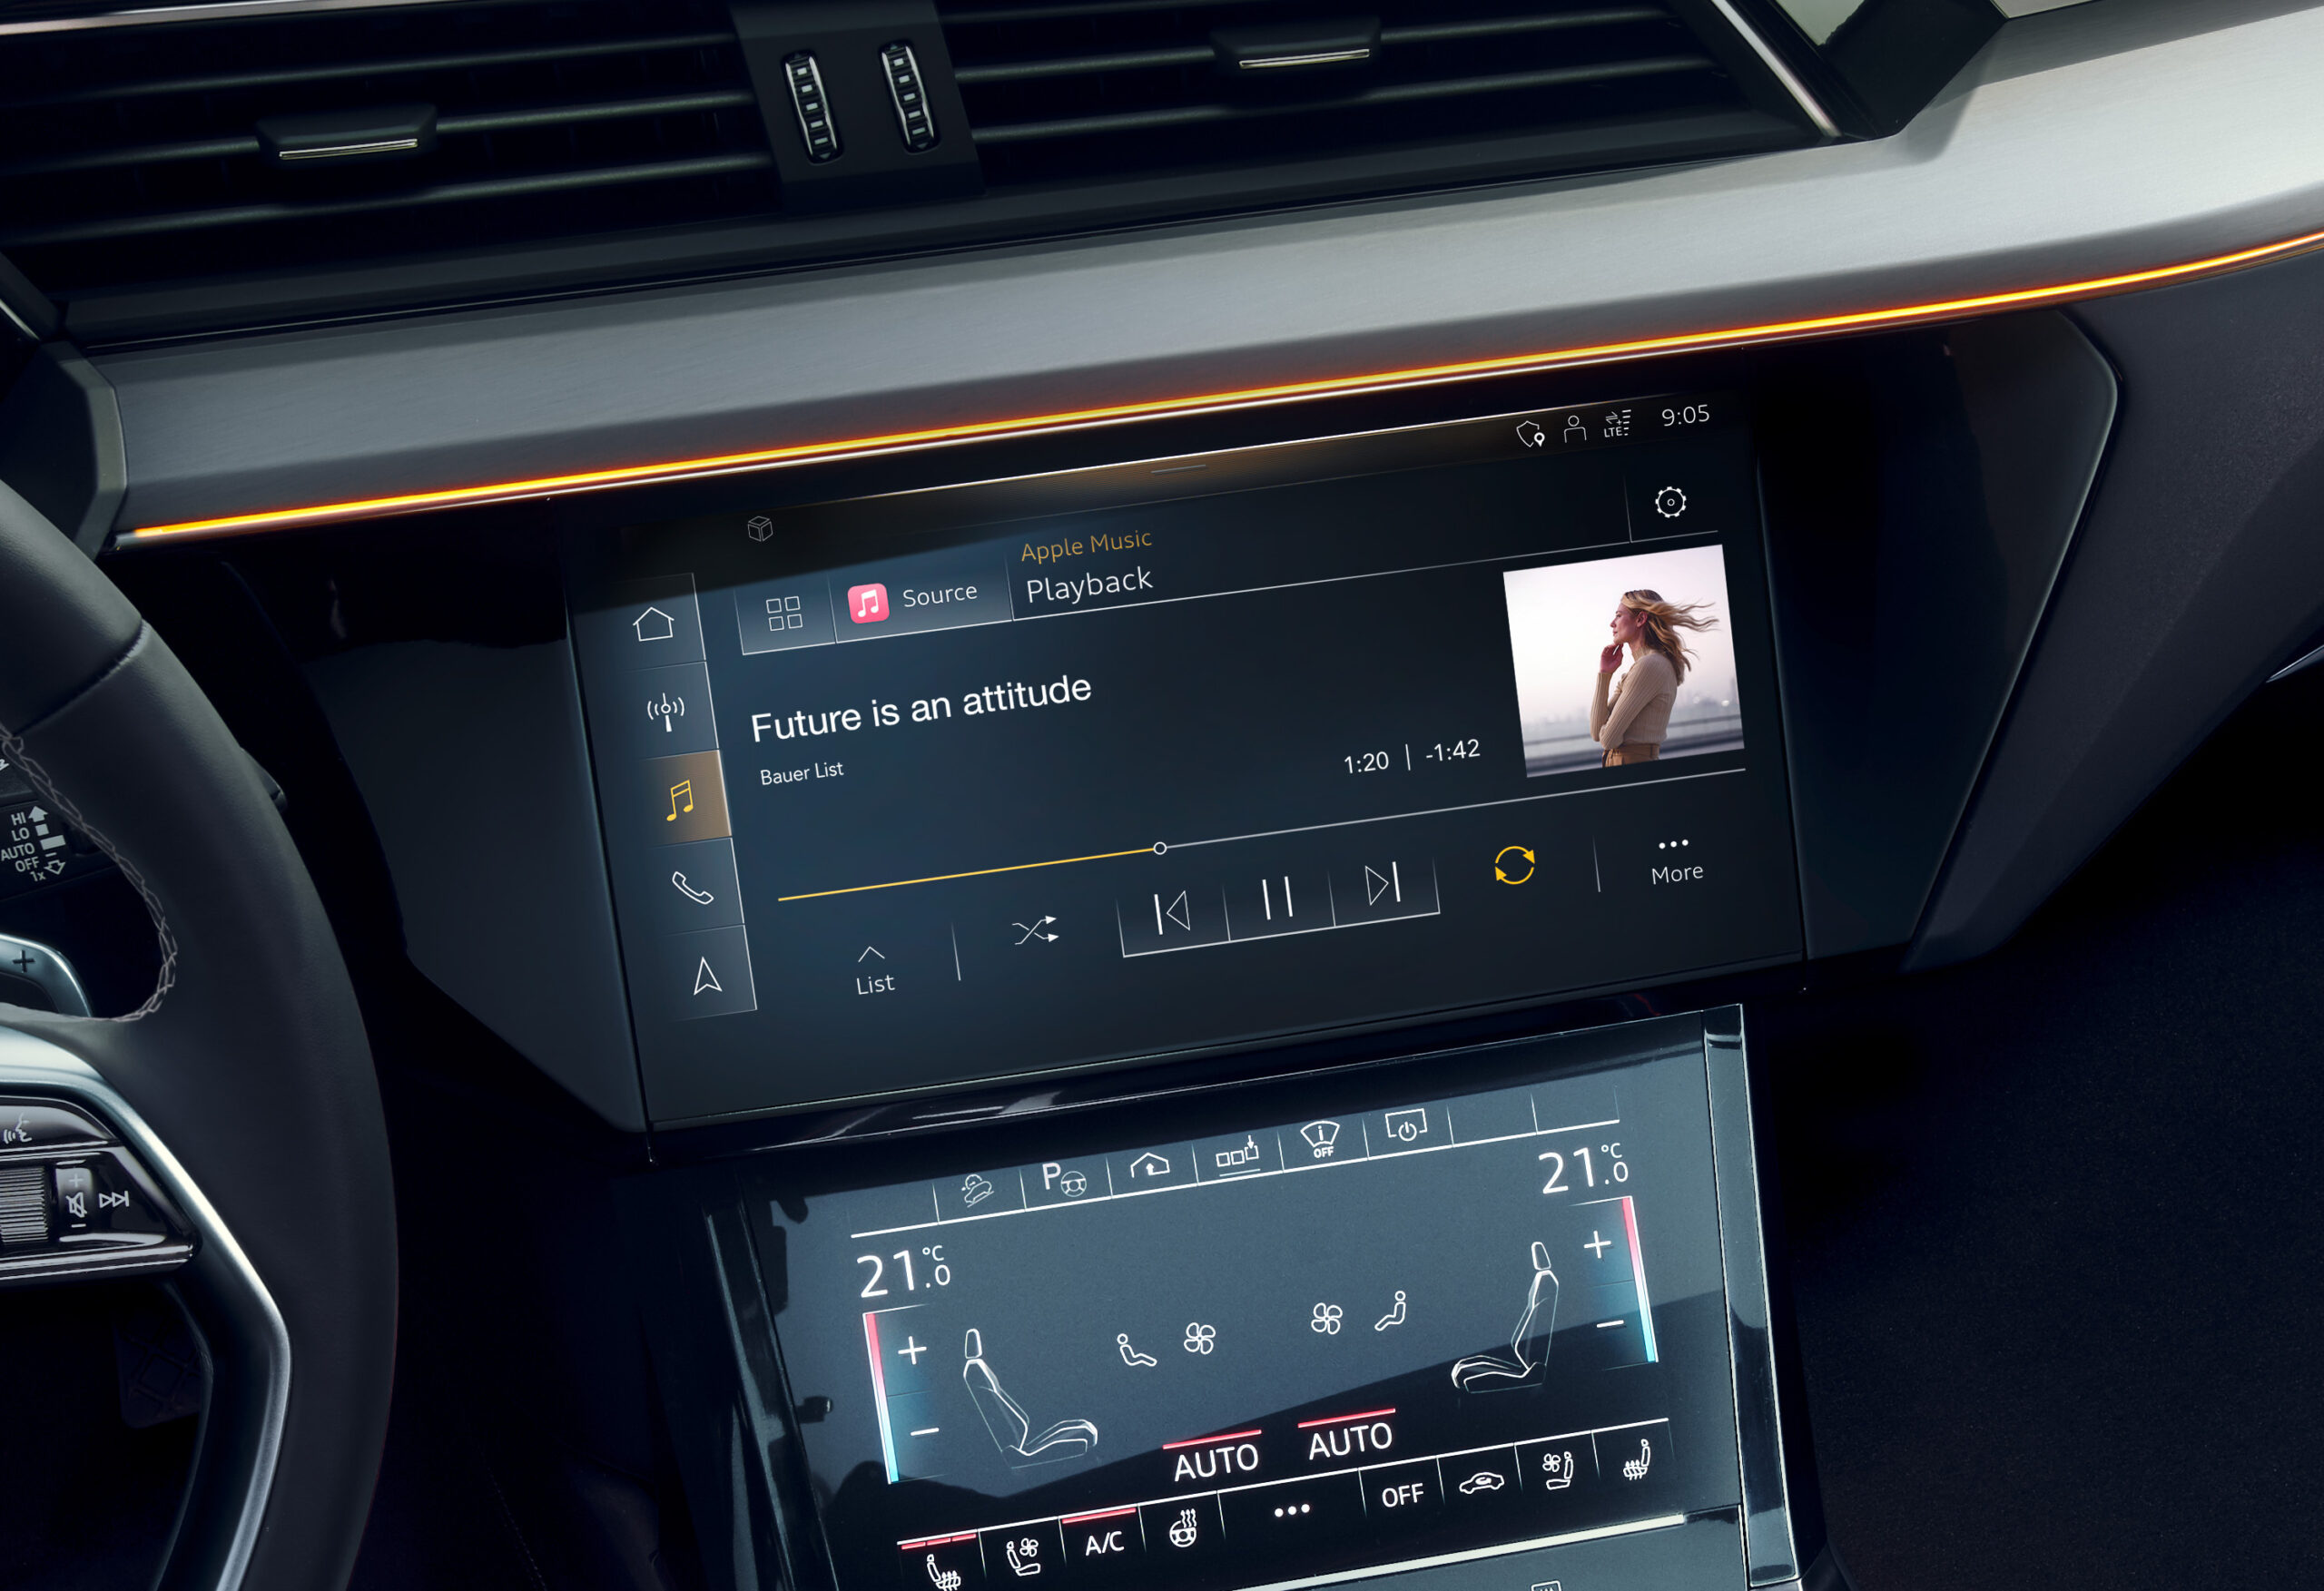 L'app Apple Music integrata nelle auto Audi